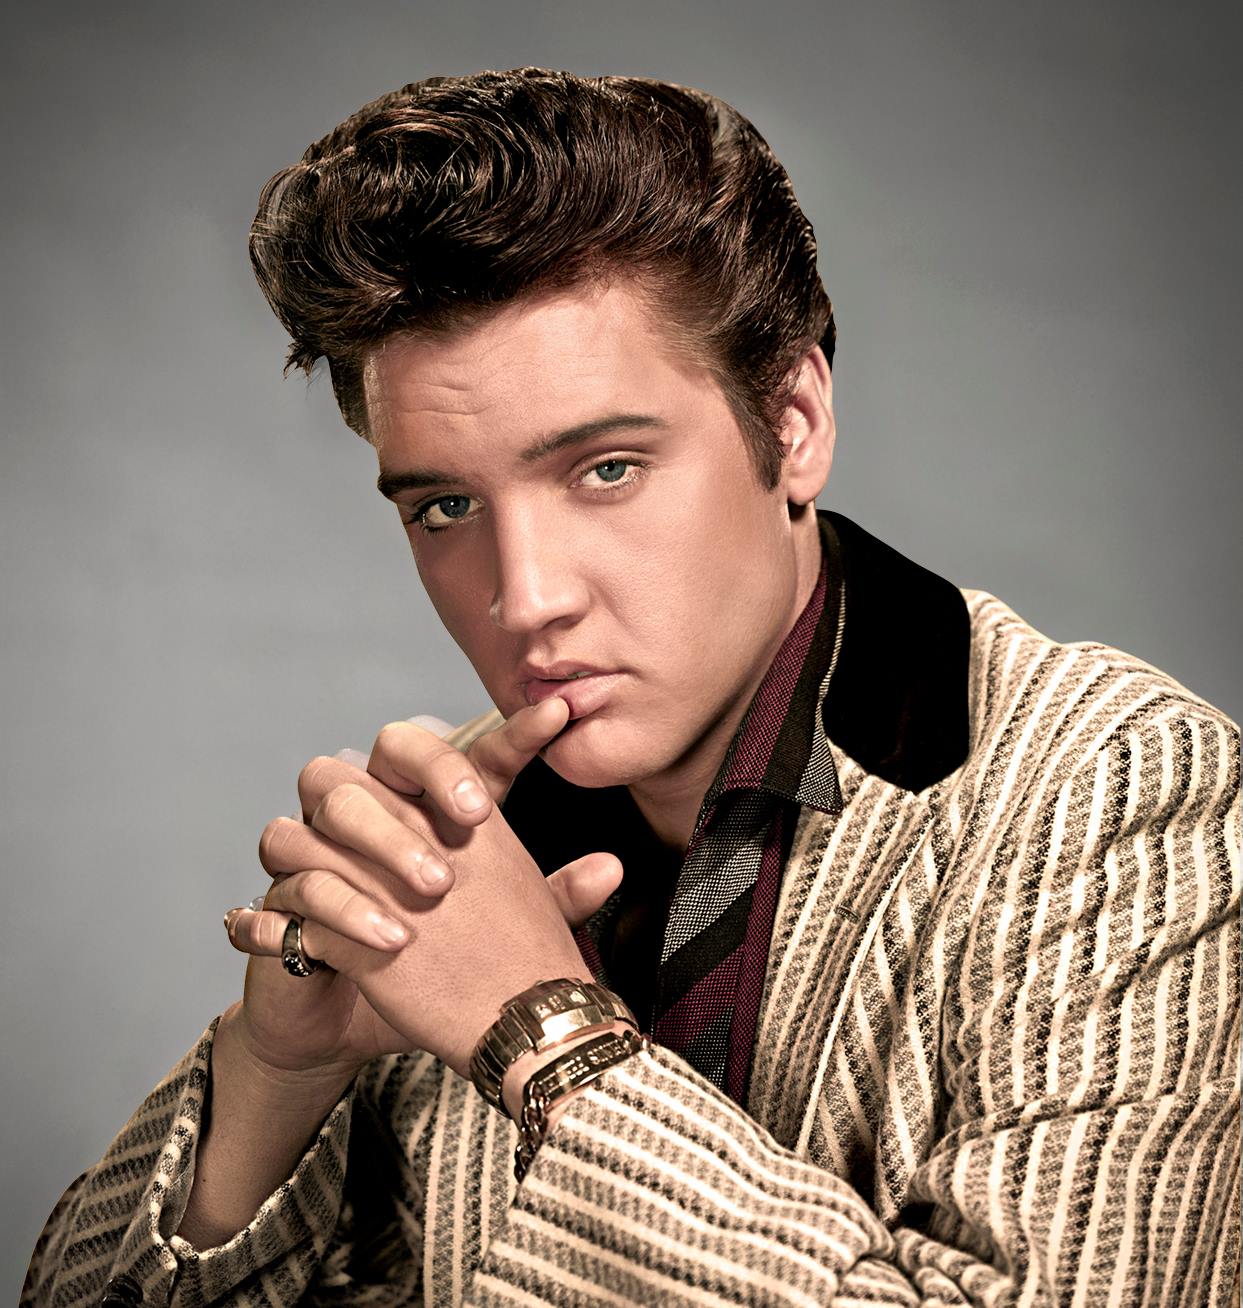 Elvis Presley Wallpapers (61+ images)